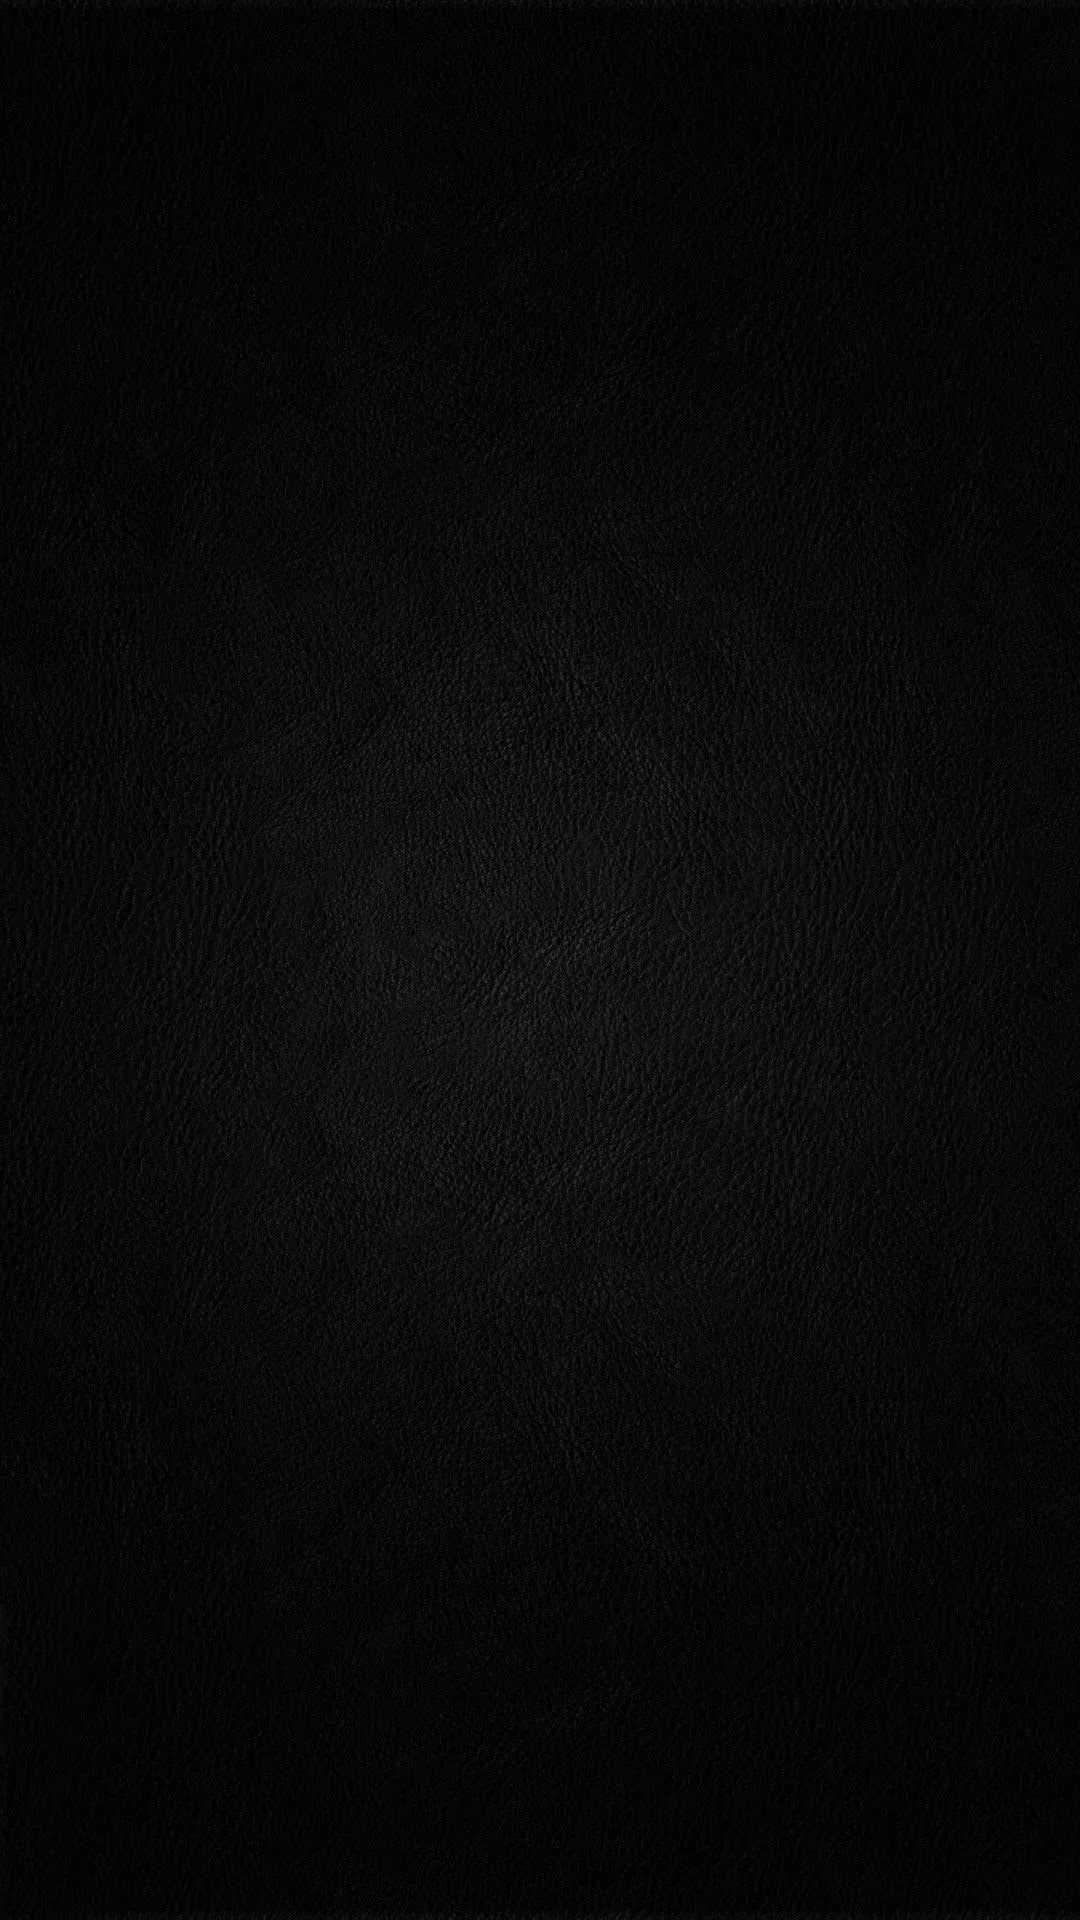 Black Screen Background Image / How To Fix Black Desktop Background In